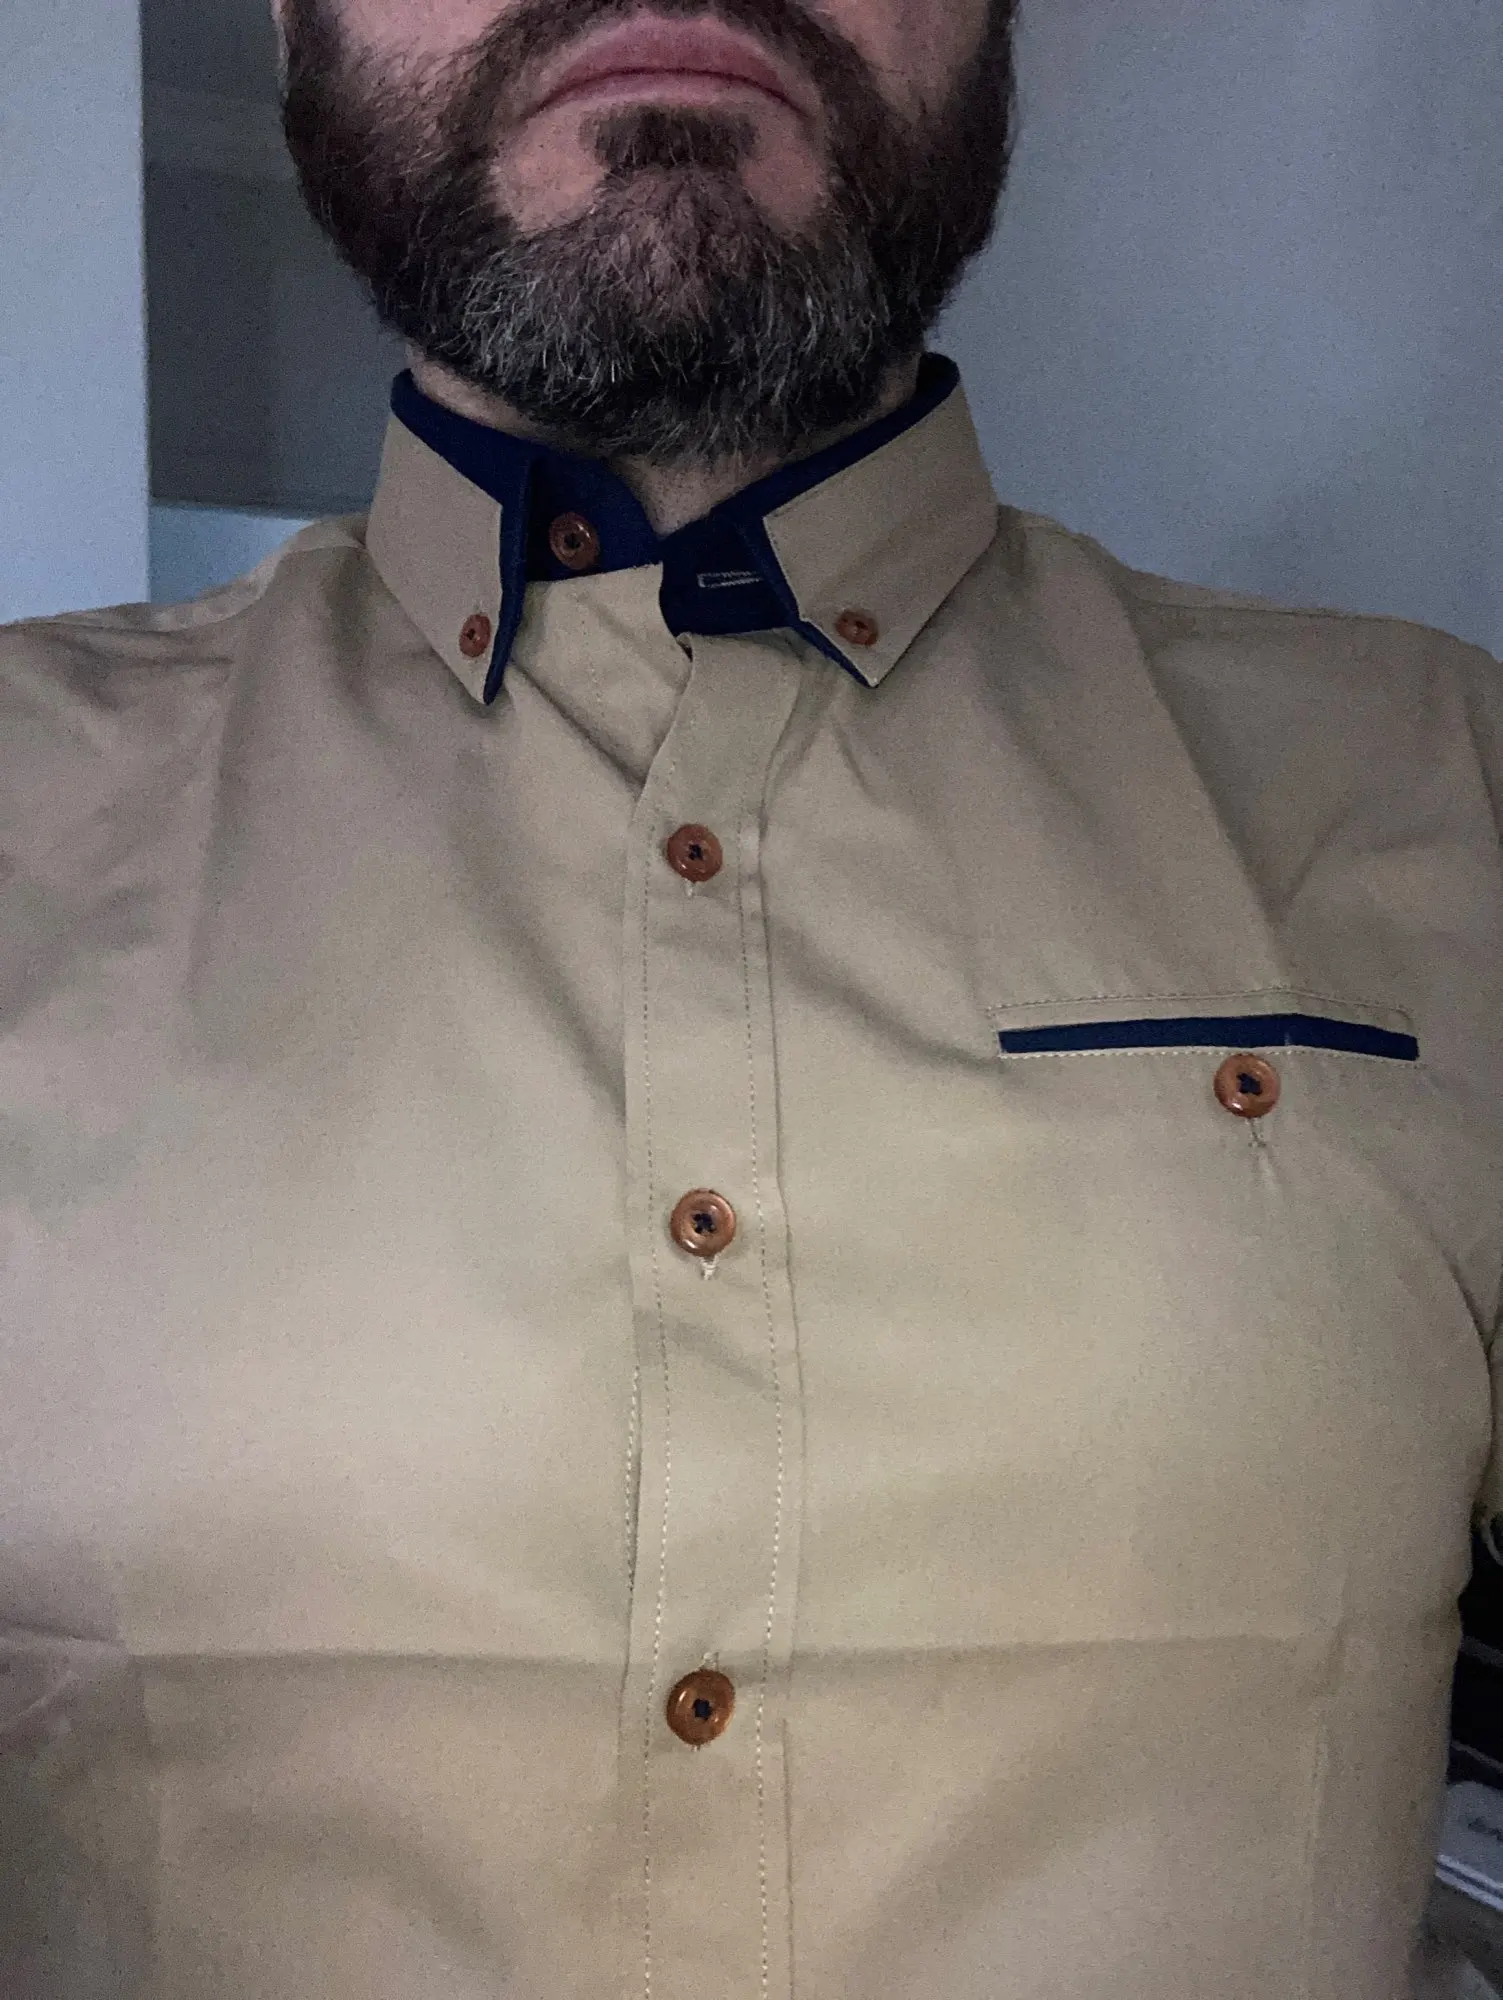 2022 New Arrival Brand Men's Summer Business Shirt Short Sleeves Turn-down Collar Tuxedo Shirt Shirt Men Shirts Big Size 5XL photo review